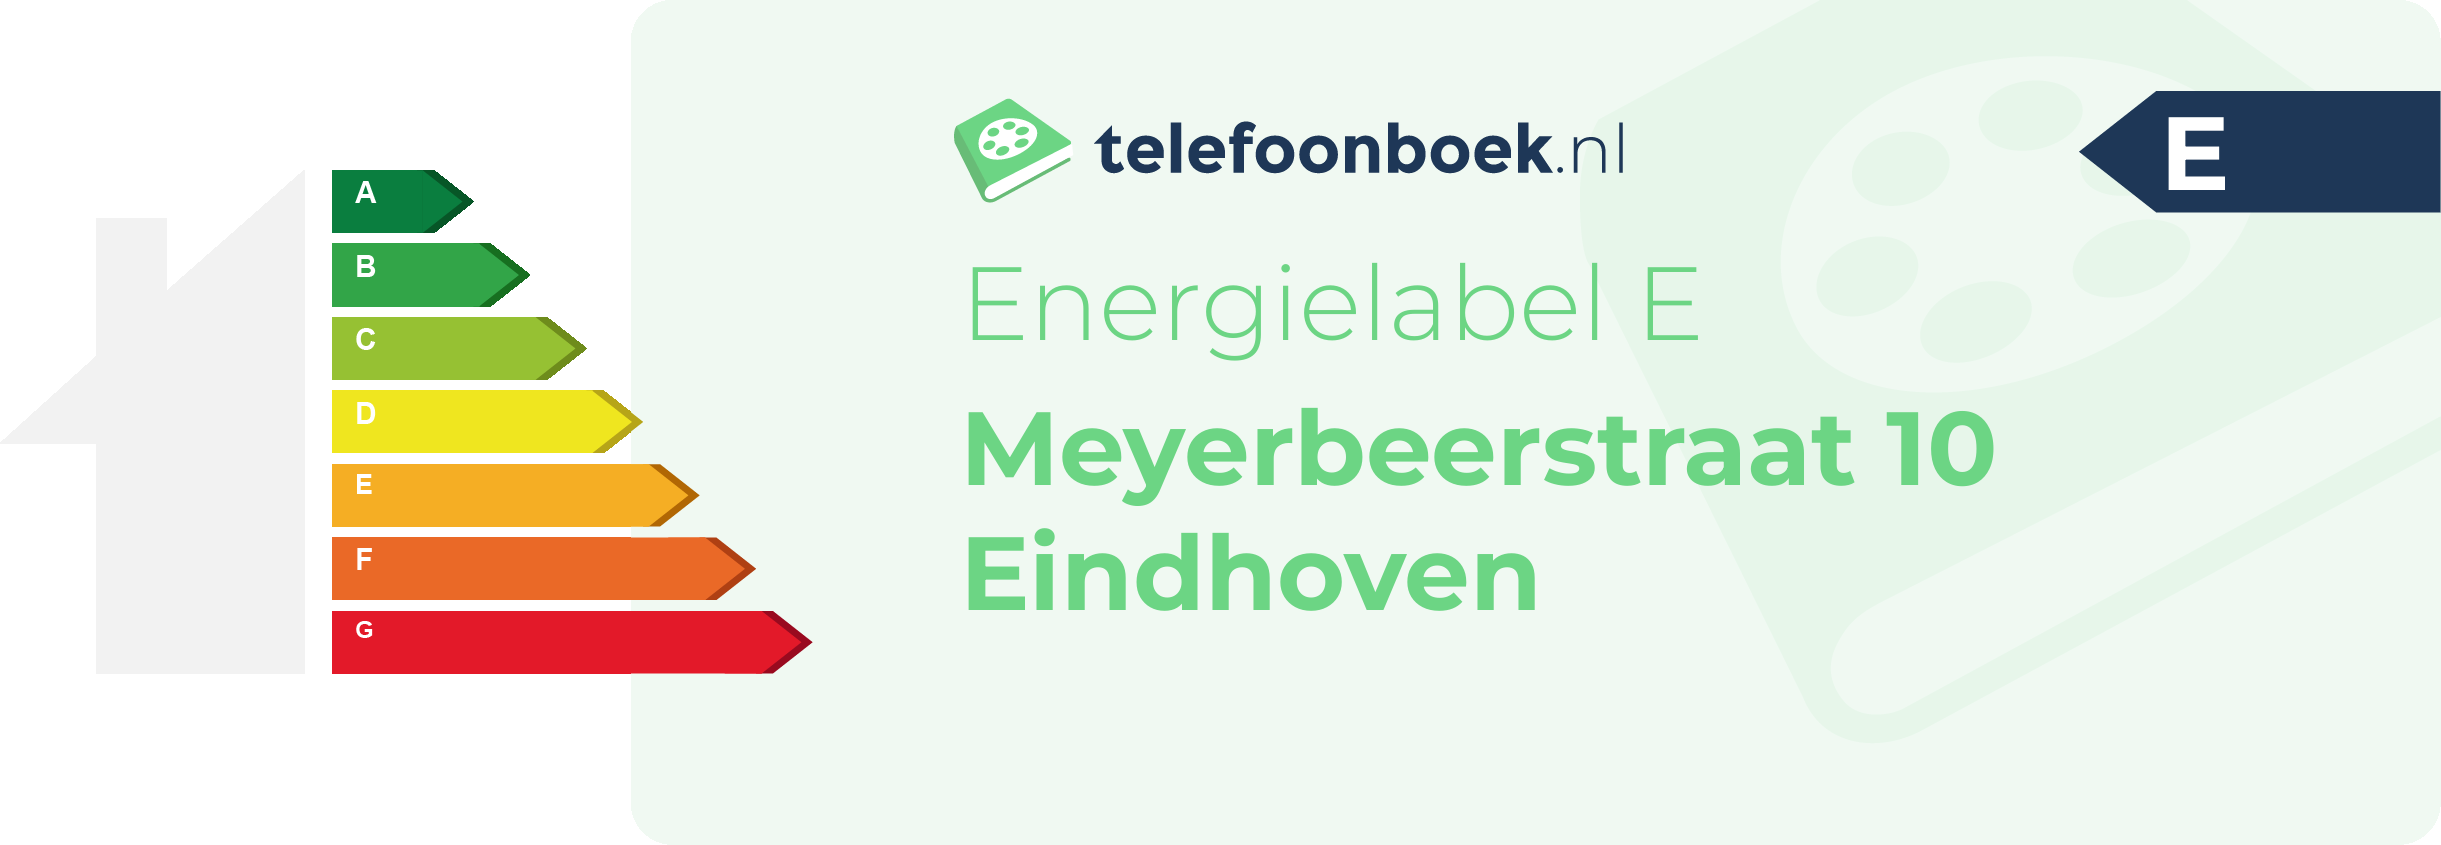 Energielabel Meyerbeerstraat 10 Eindhoven